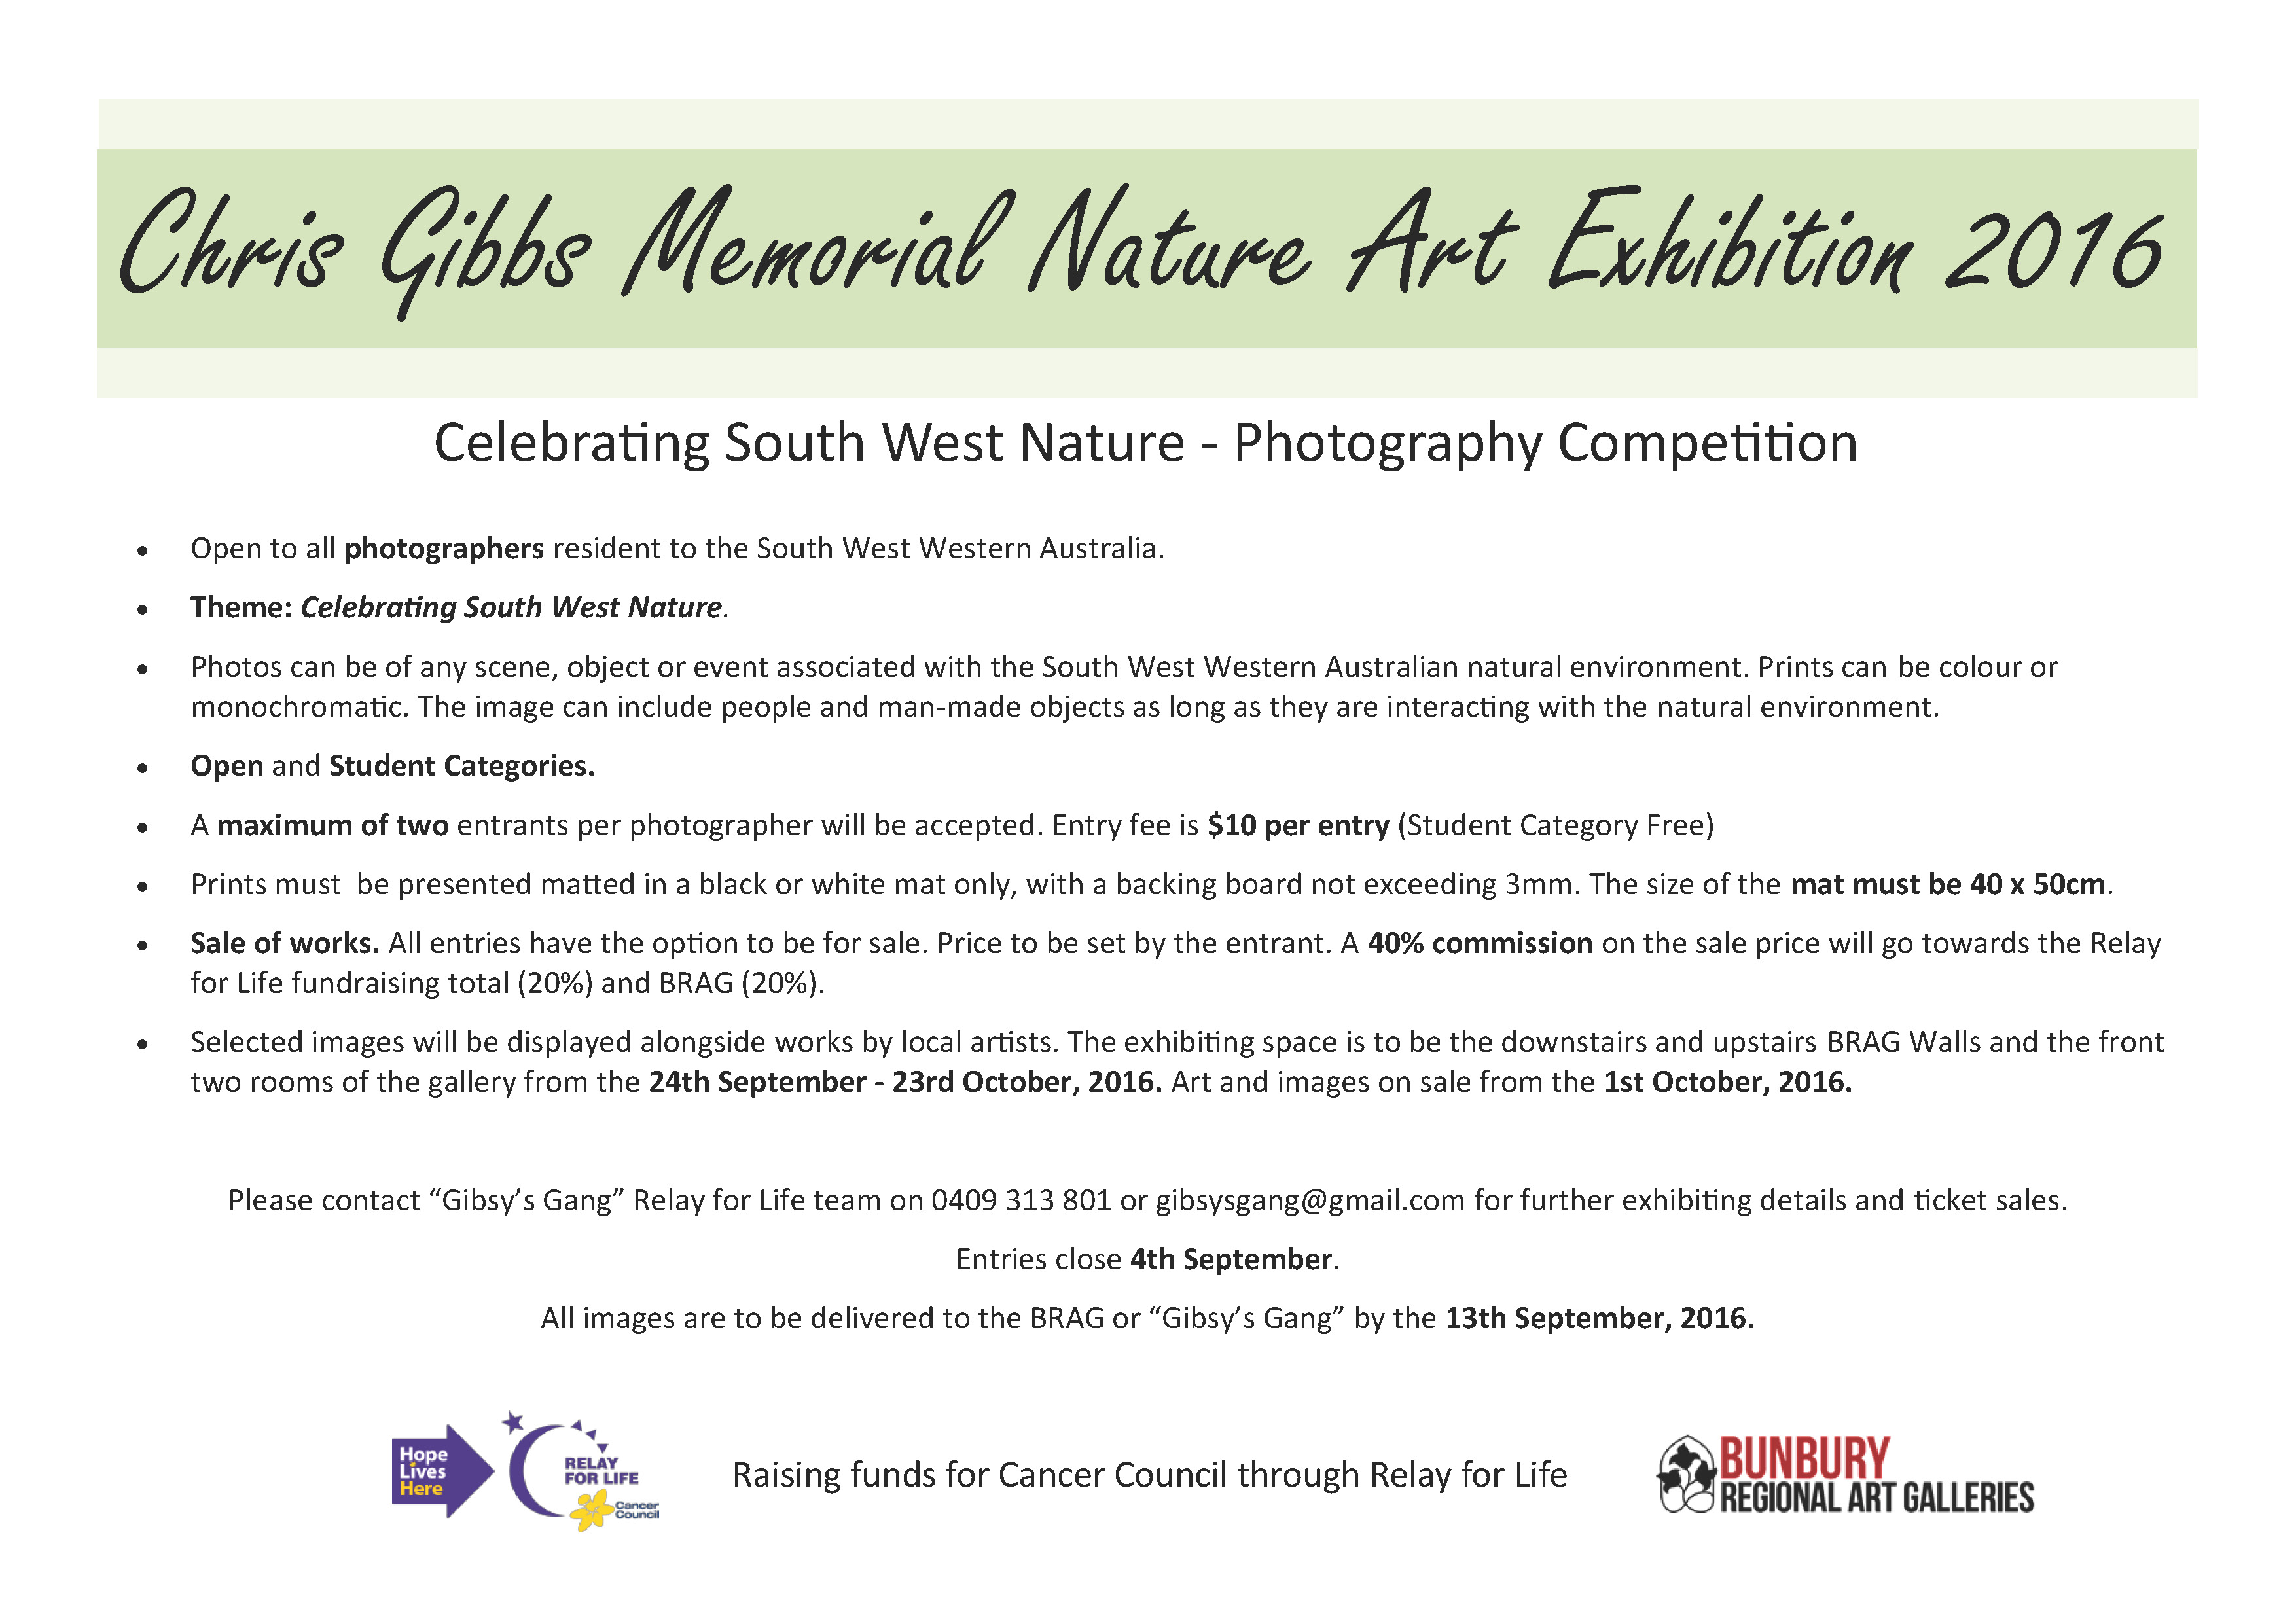 Chris Gibbs Memorial Nature Art Exhibition 2016 Photo Comp